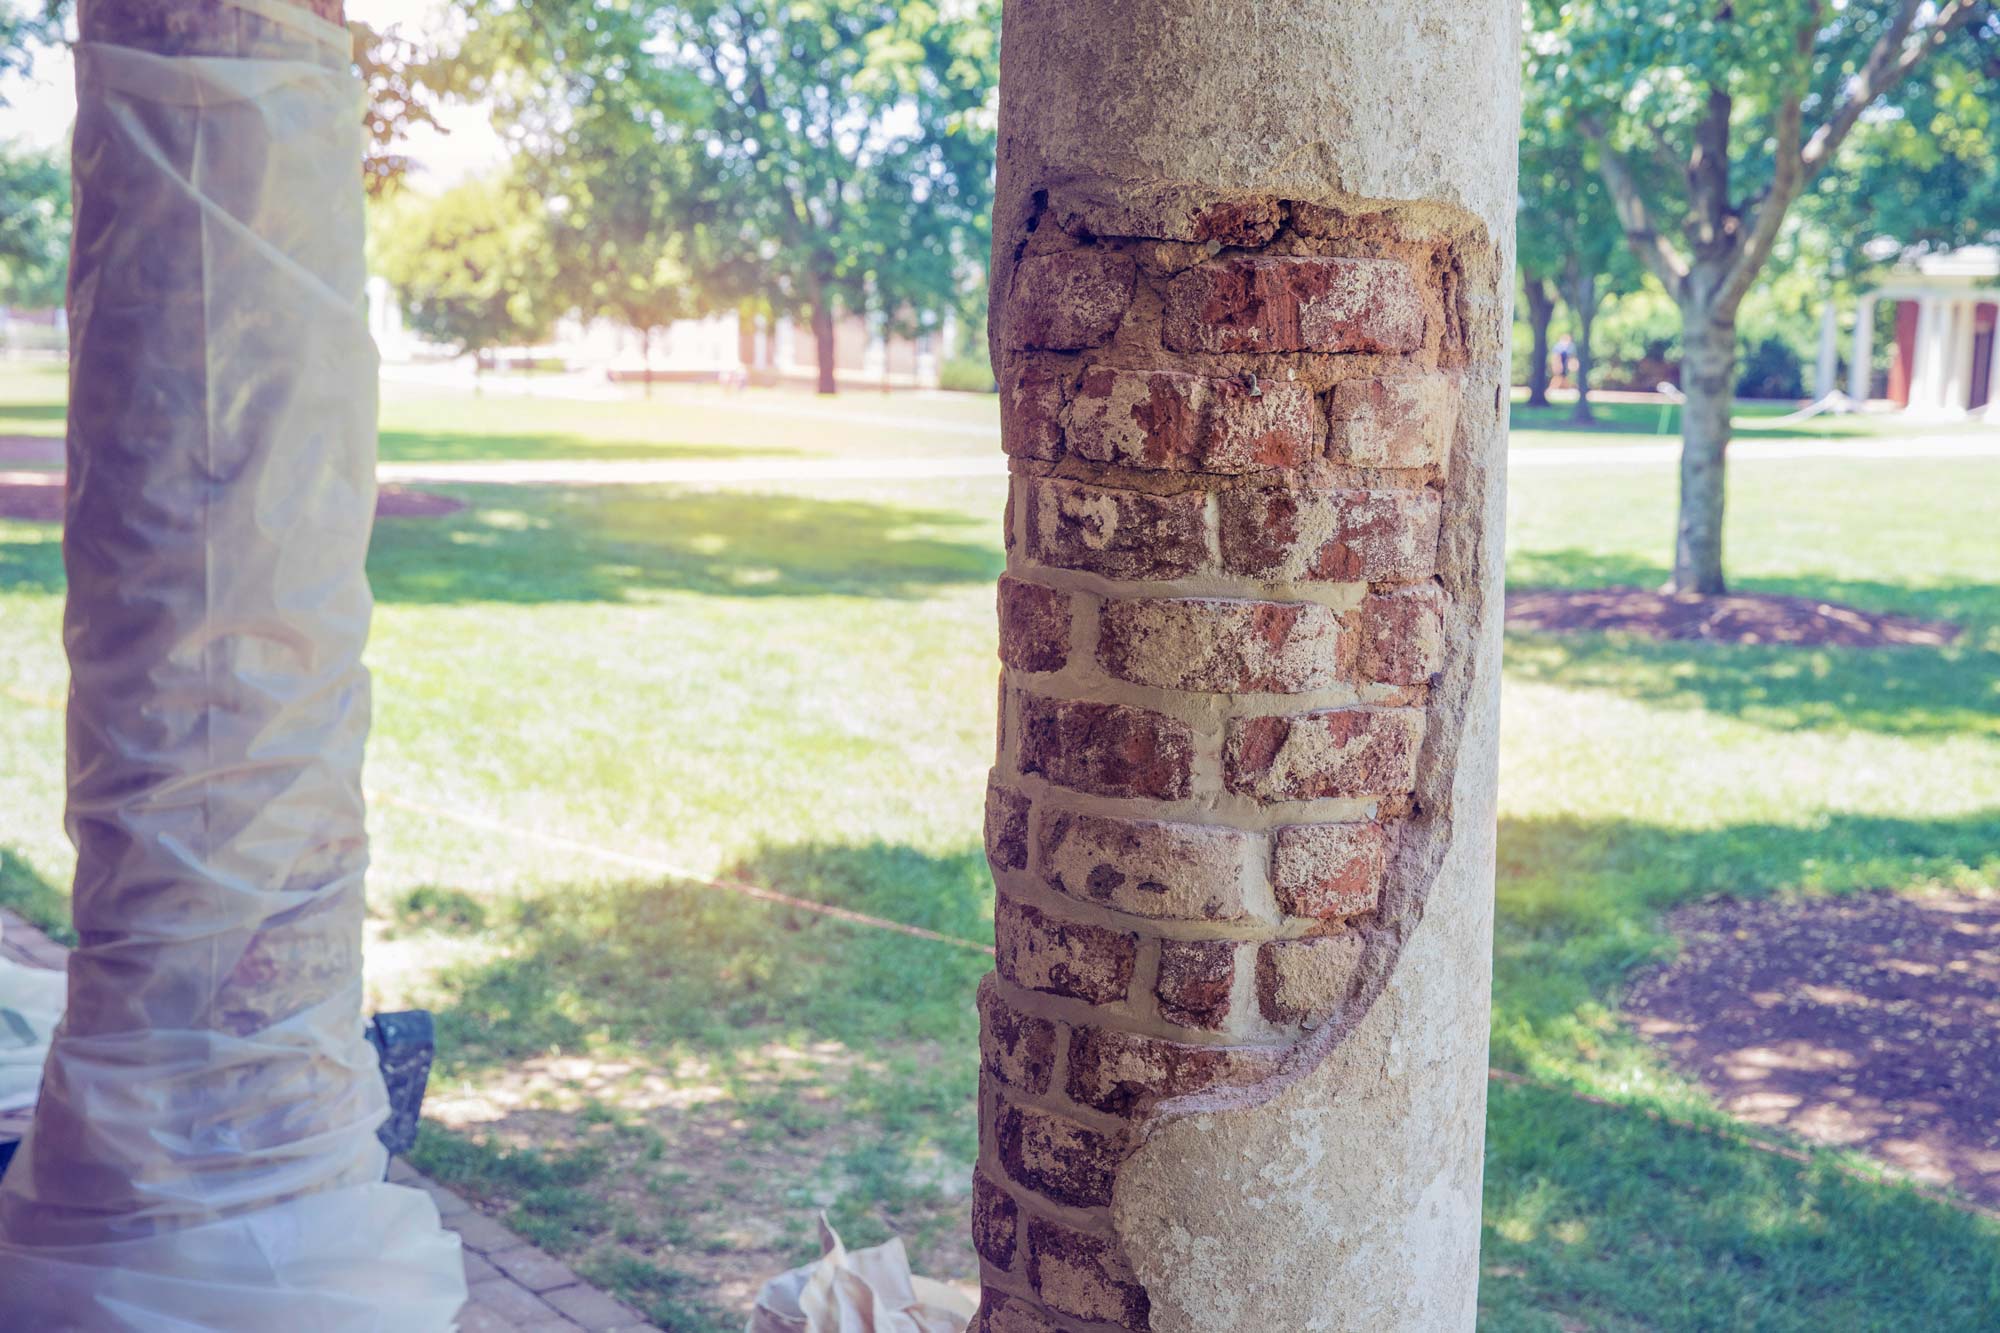 Cinderblock removed from a column exposing brick beneath